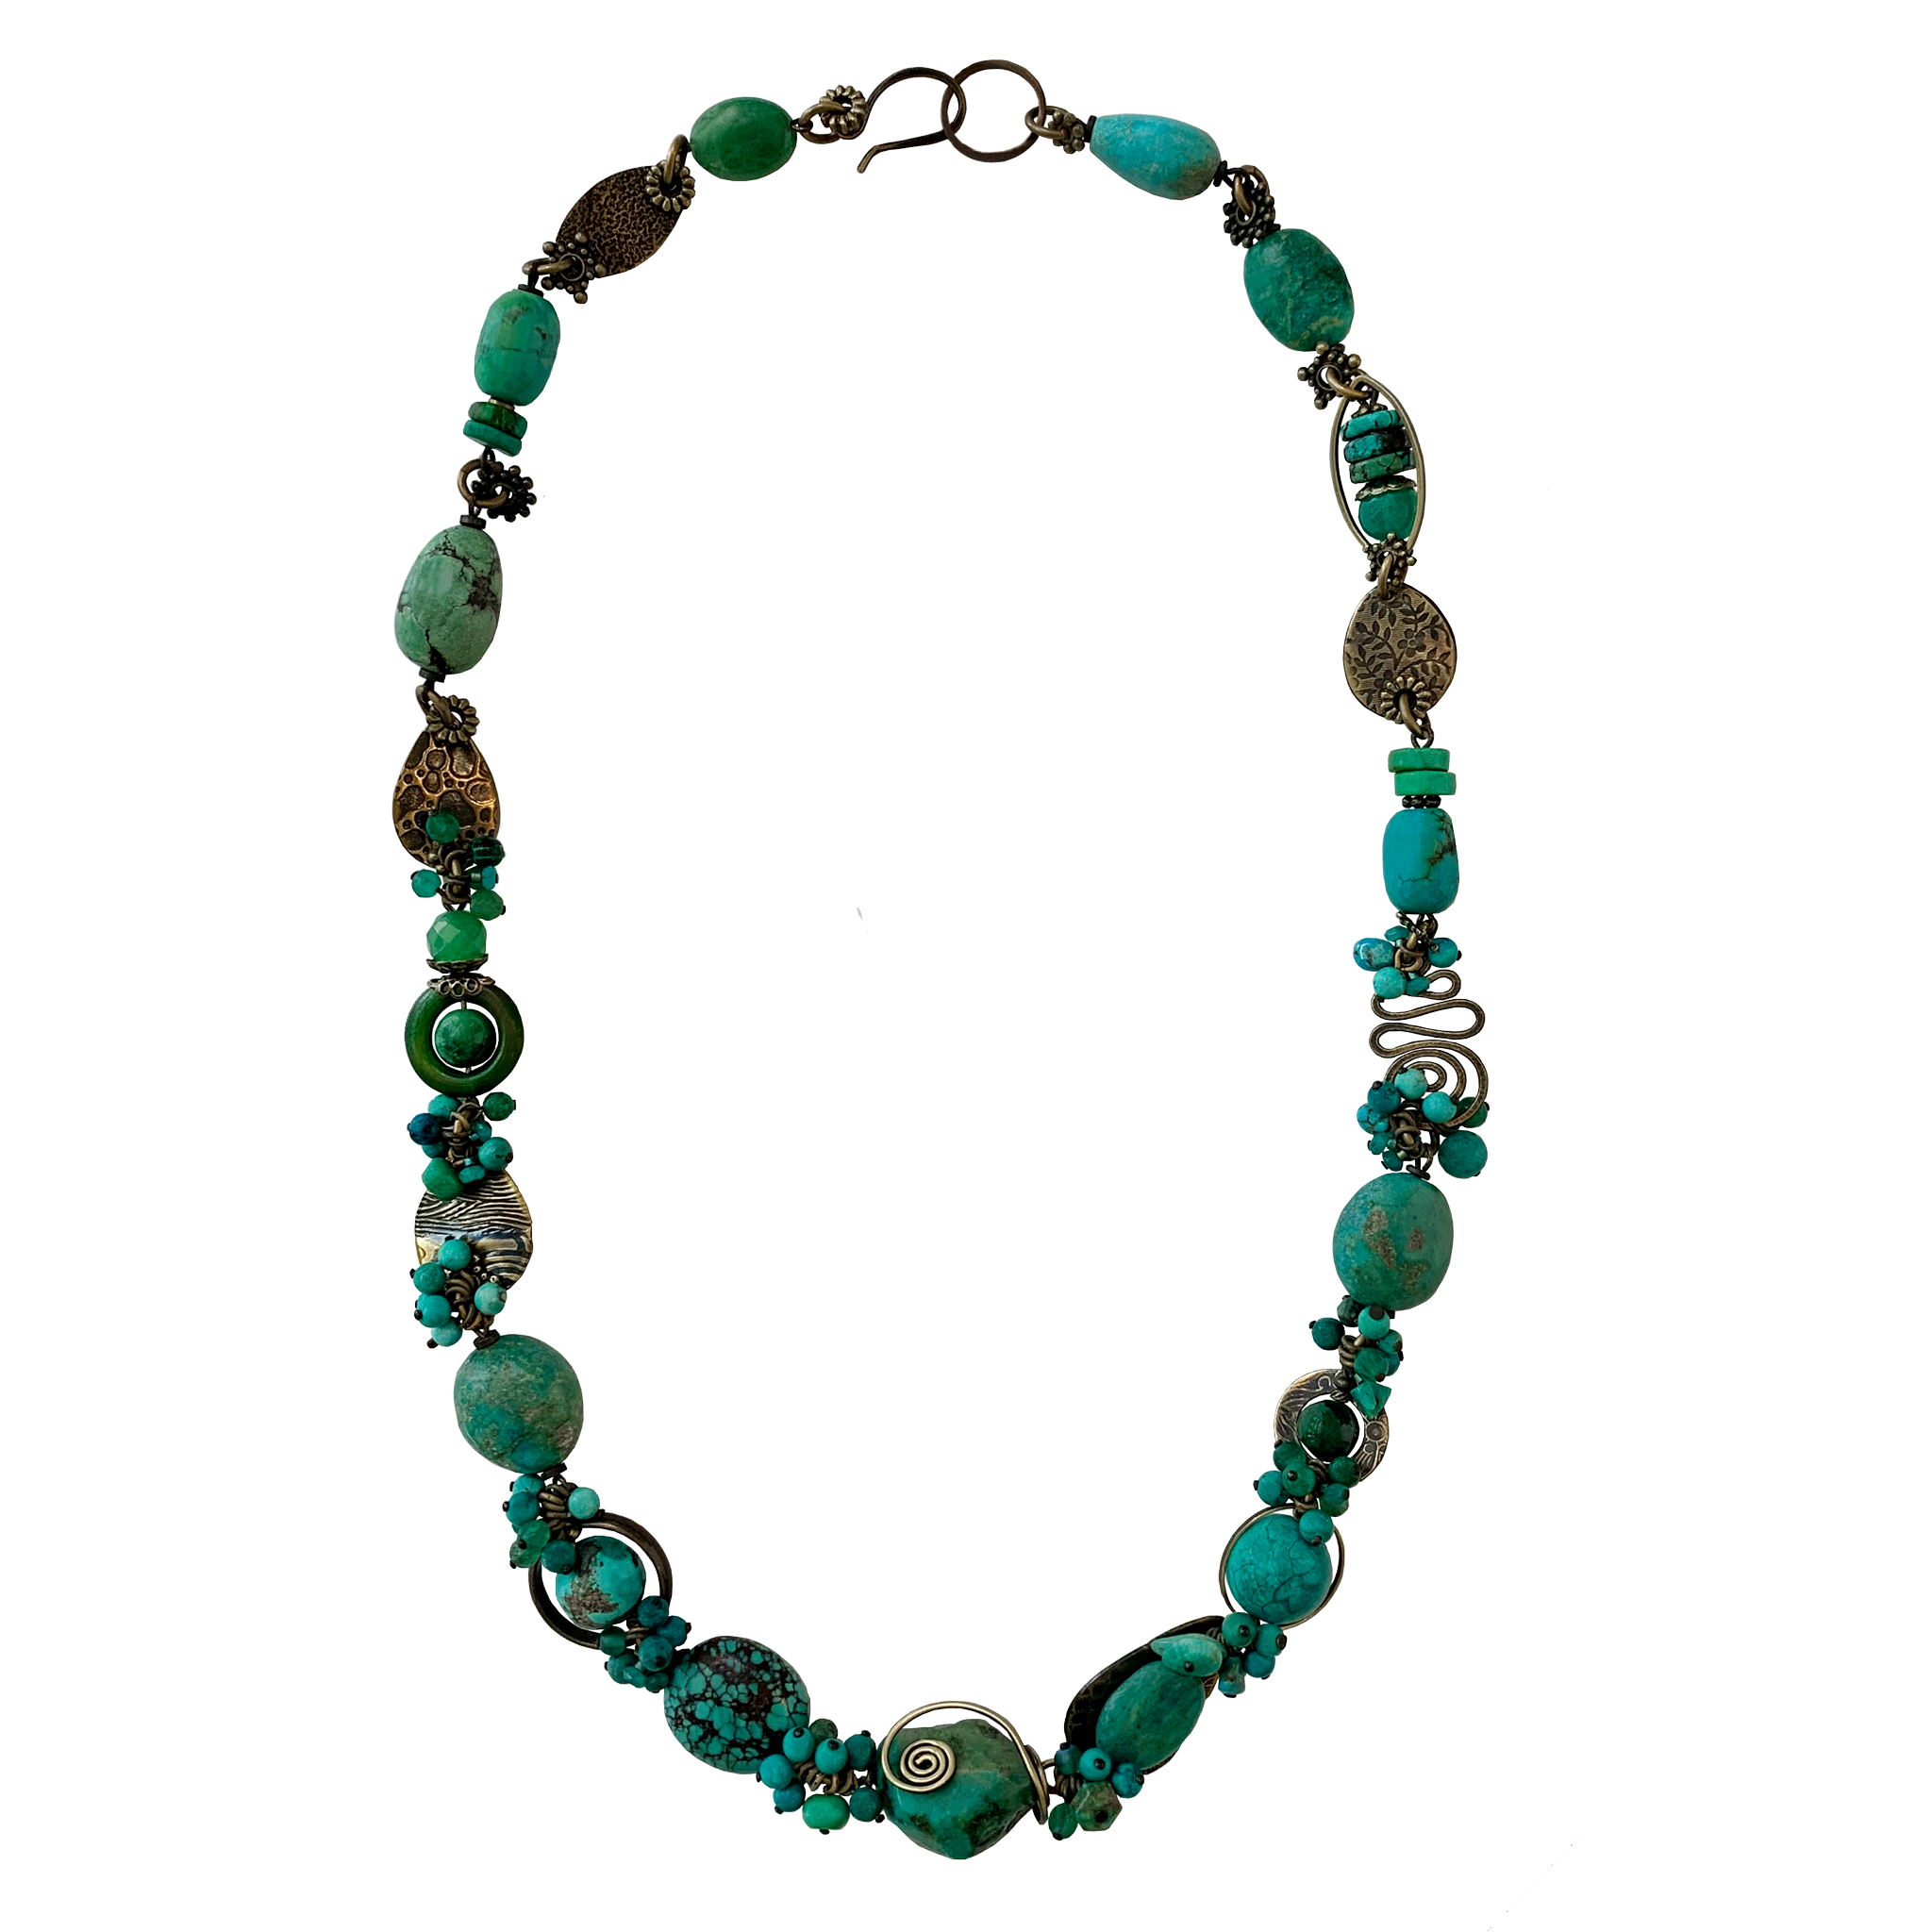 Turquoise Swirl Necklace